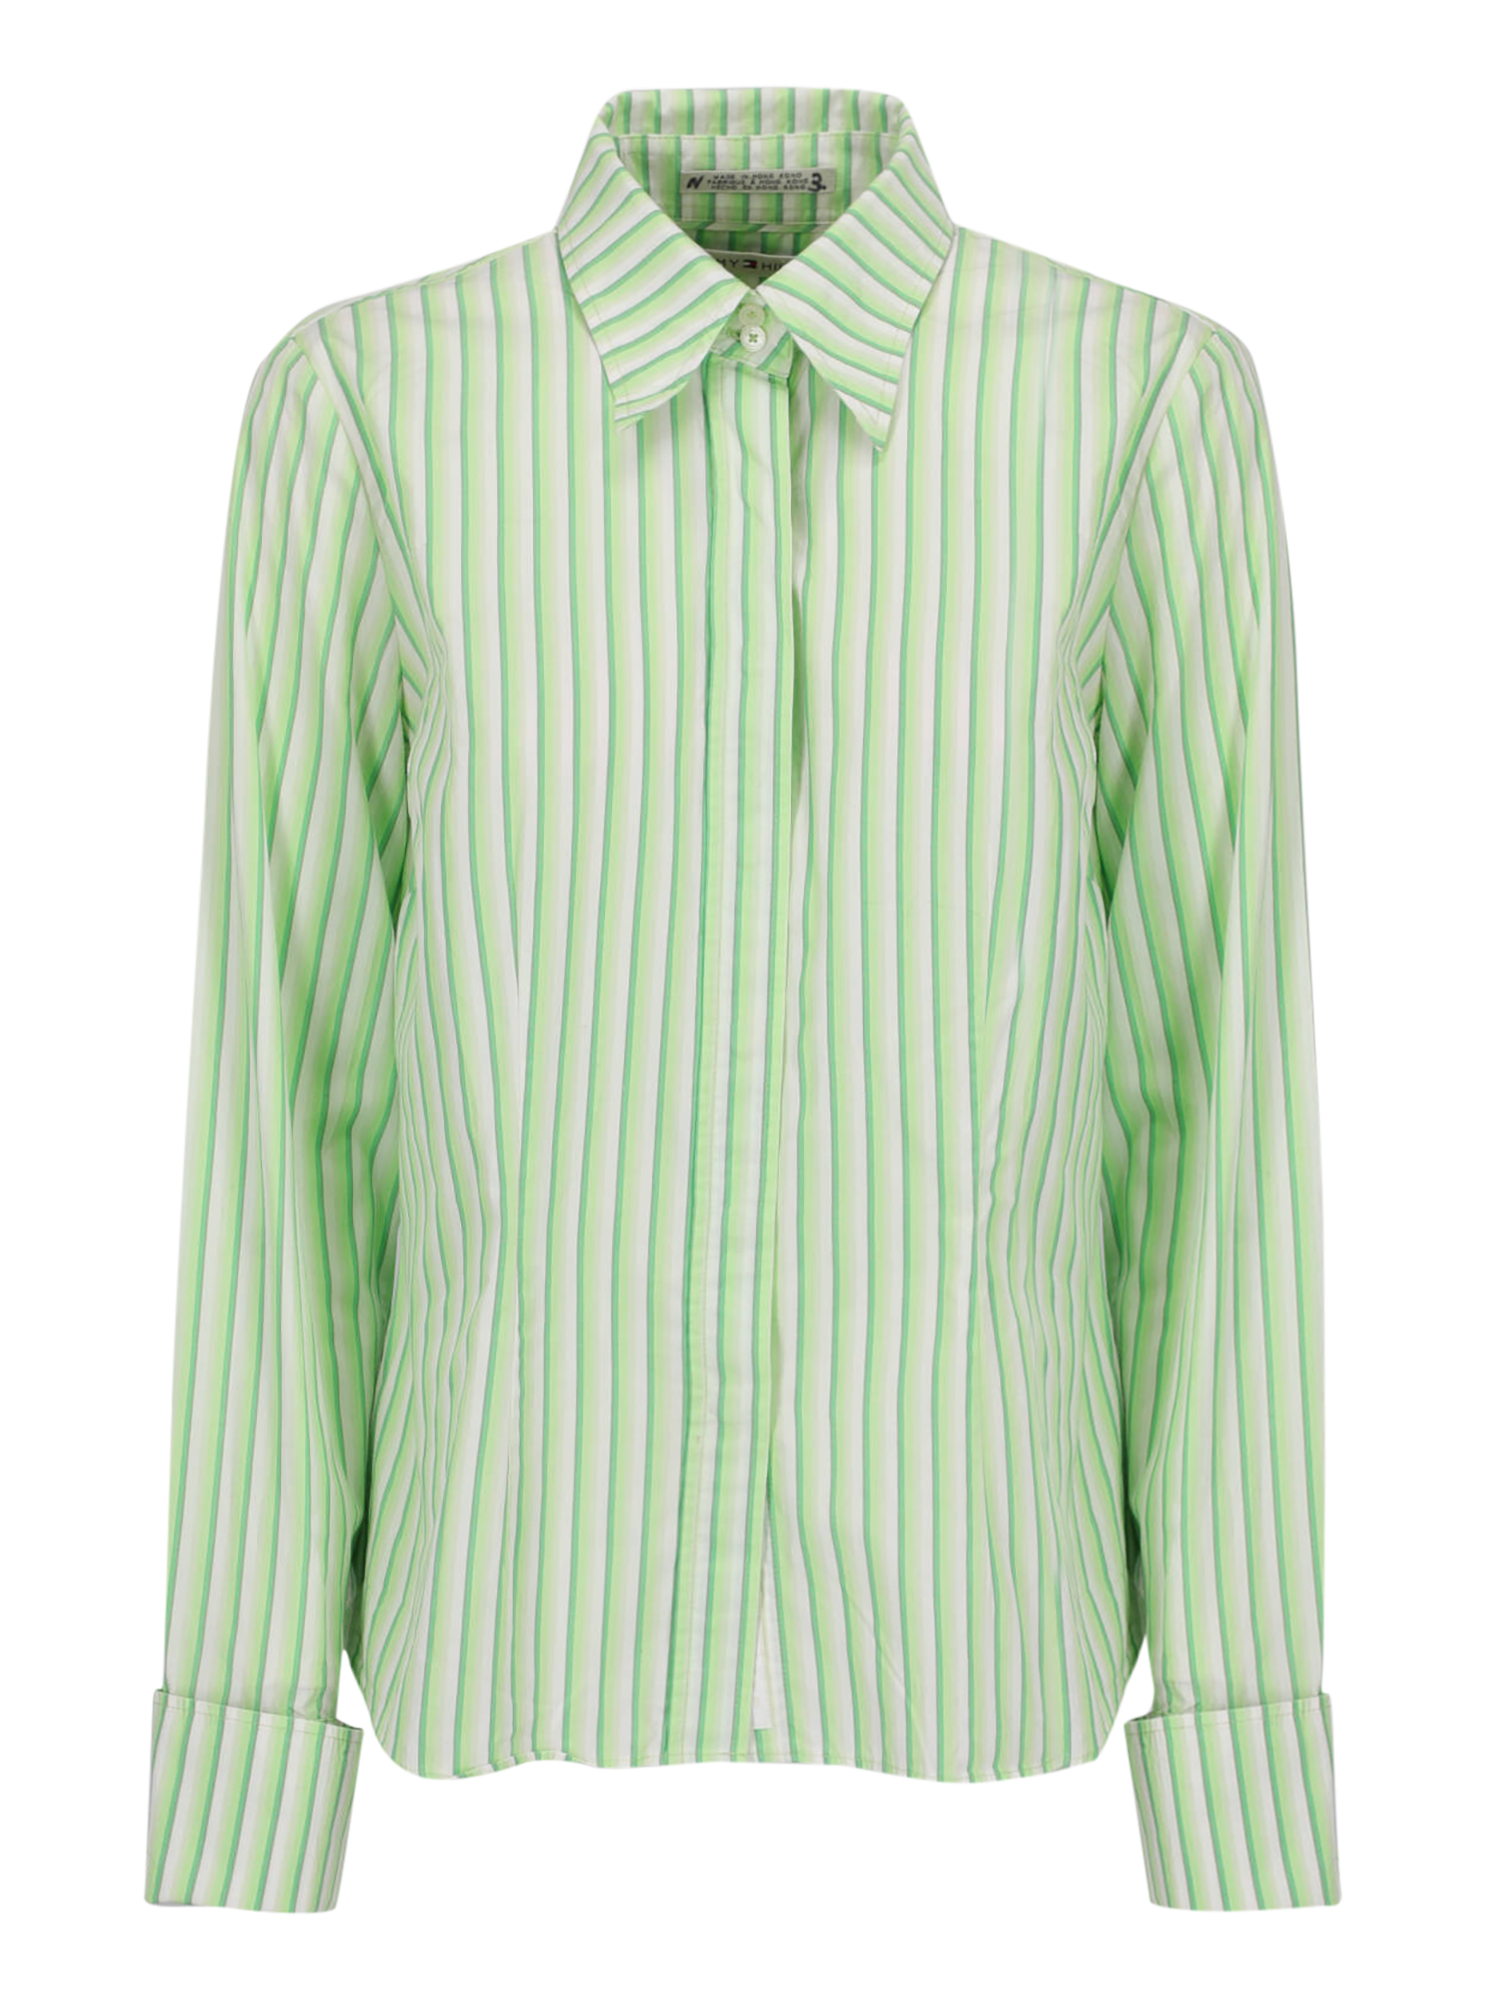 Condition: Good, Striped Cotton, Color: Green, White - M - US 8 -